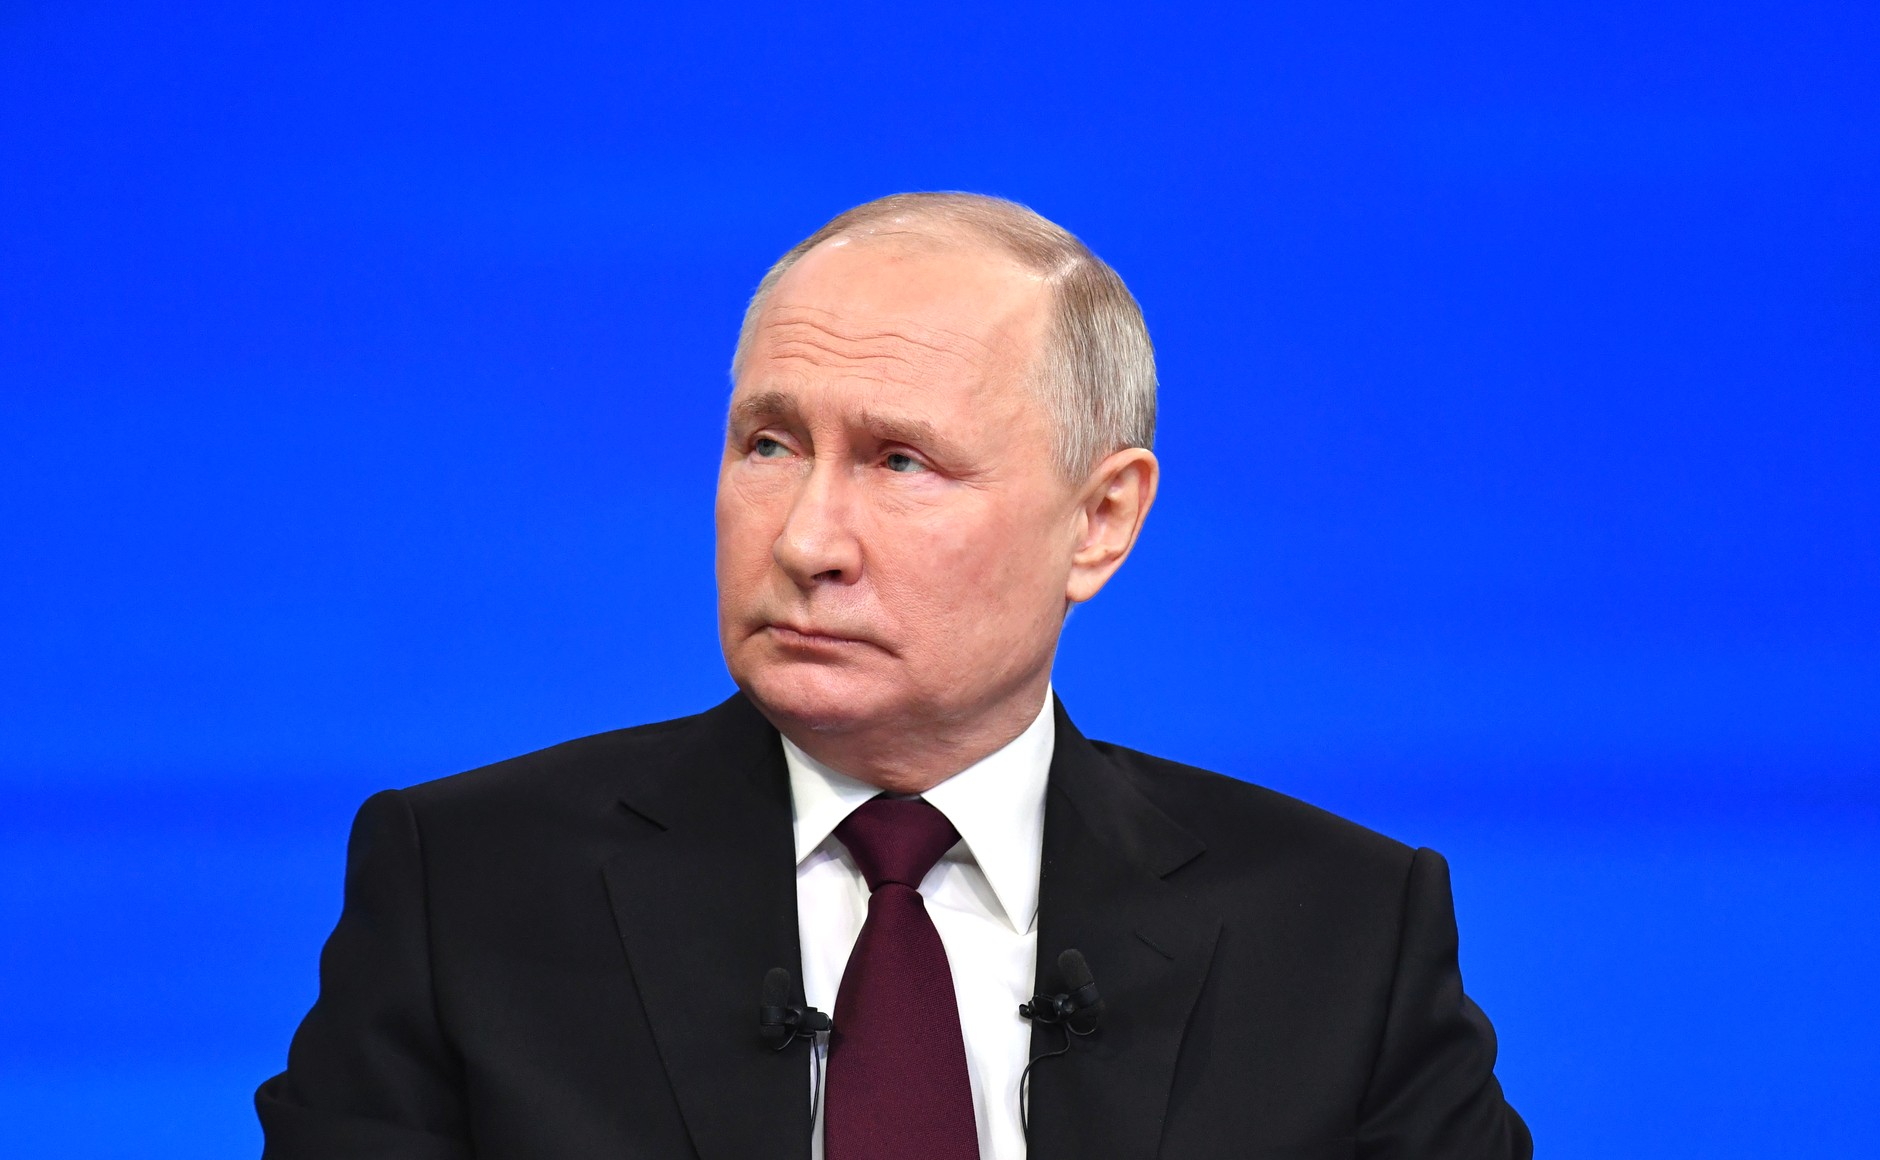 Elezioni presidenziali russe: Putin presenta i documenti per (ri)candidarsi nel 2024